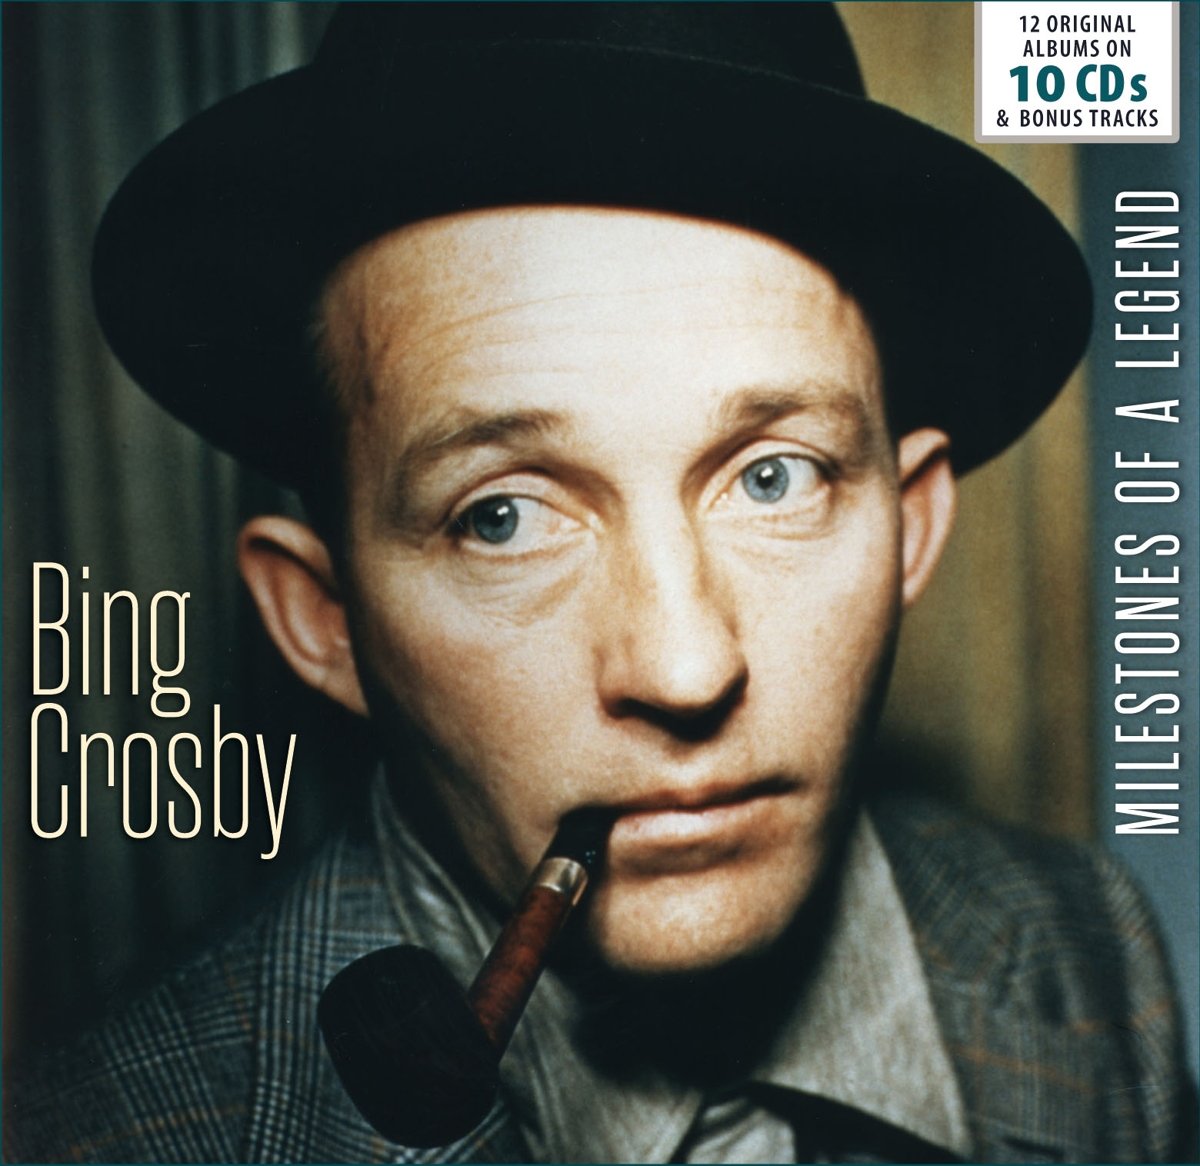 BING CROSBY: MILESTONES OF A LEGEND  (10 CDS)